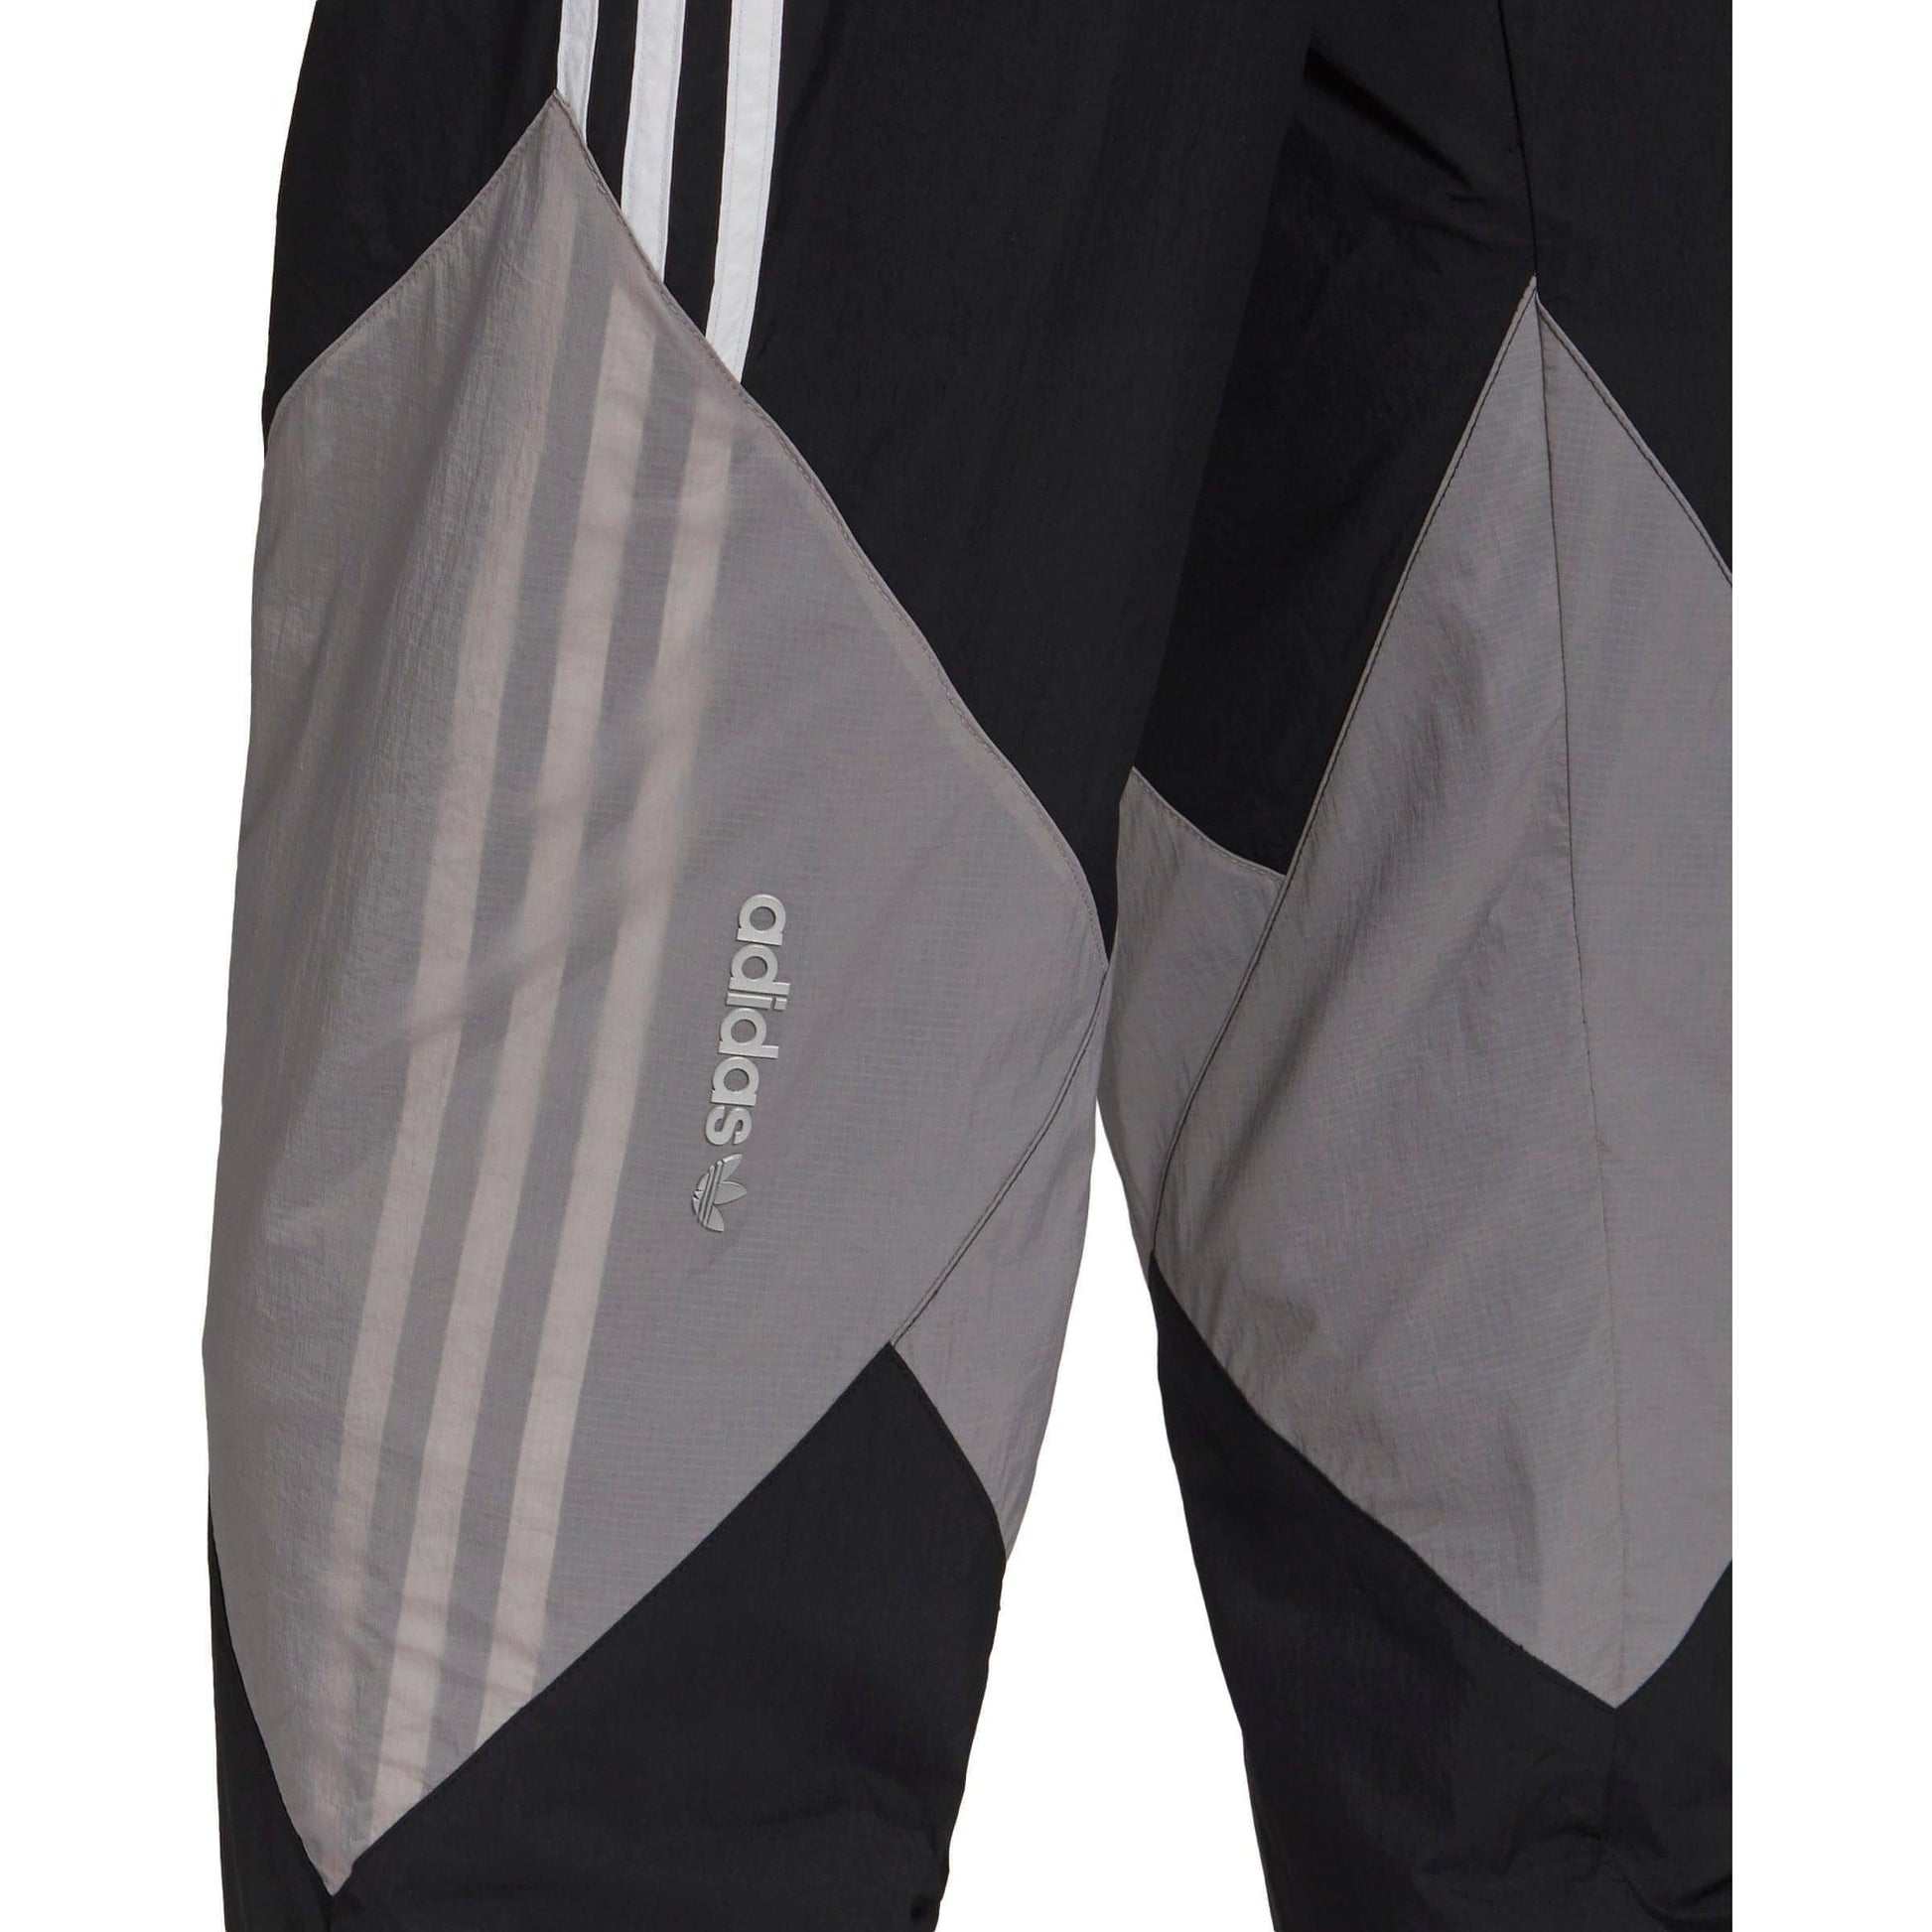 Adidas Sprt Lightning Track Pants He4715 Details